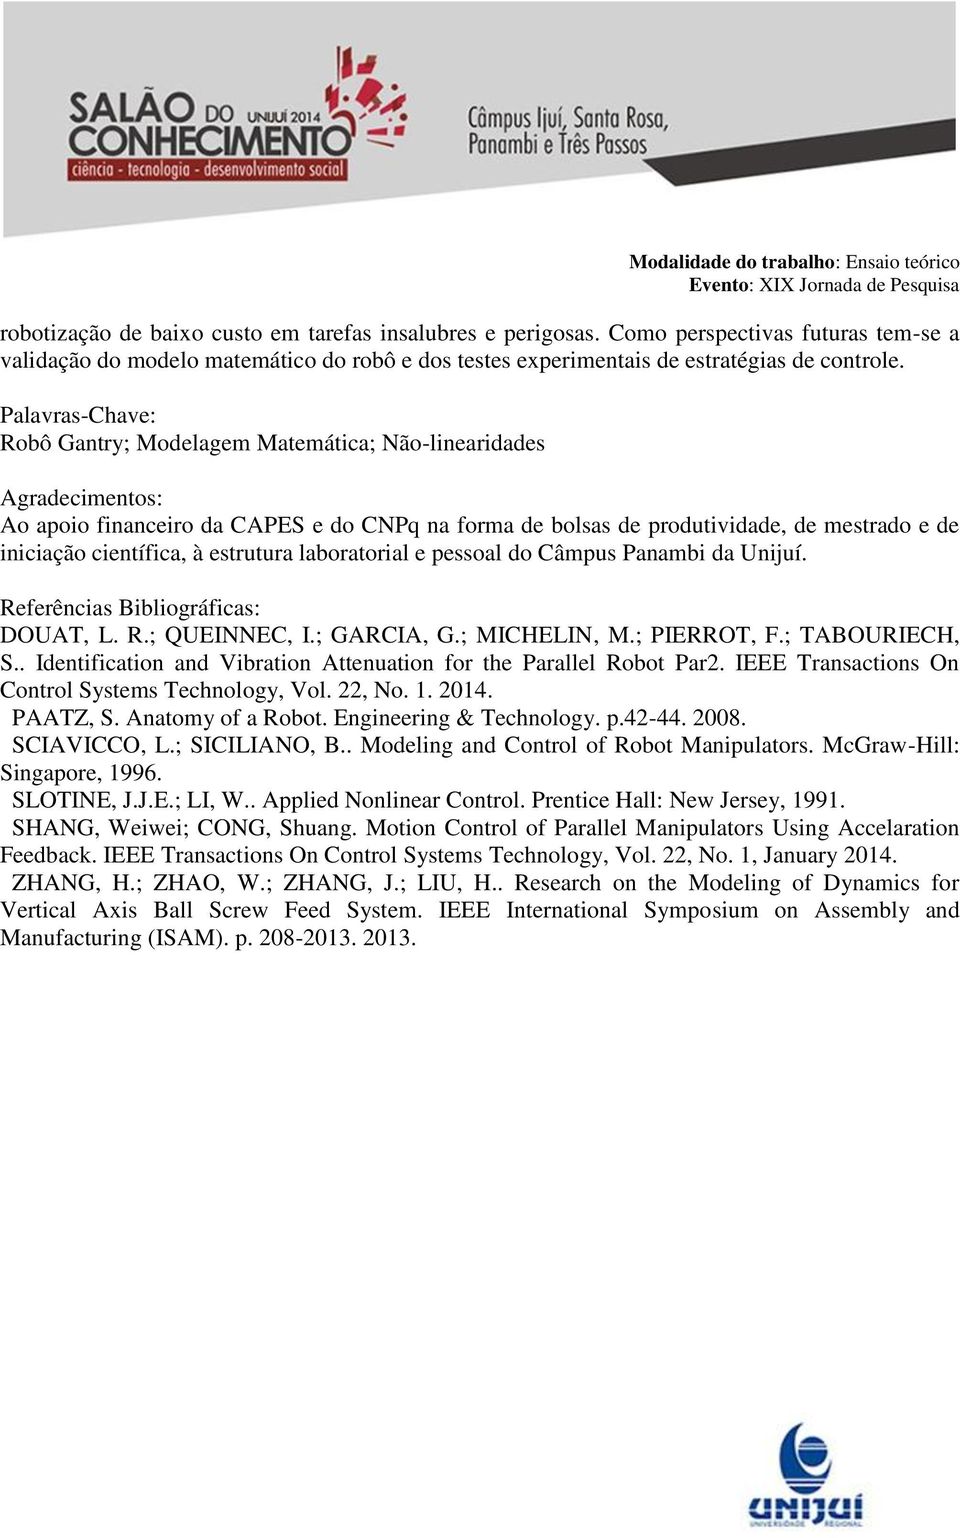 à estrutura laboratorial e pessoal do Câmpus Panambi da Unijuí. Referências Bibliográficas: DOUAT, L. R.; QUEINNEC, I.; GARCIA, G.; MICHELIN, M.; PIERROT, F.; TABOURIECH, S.